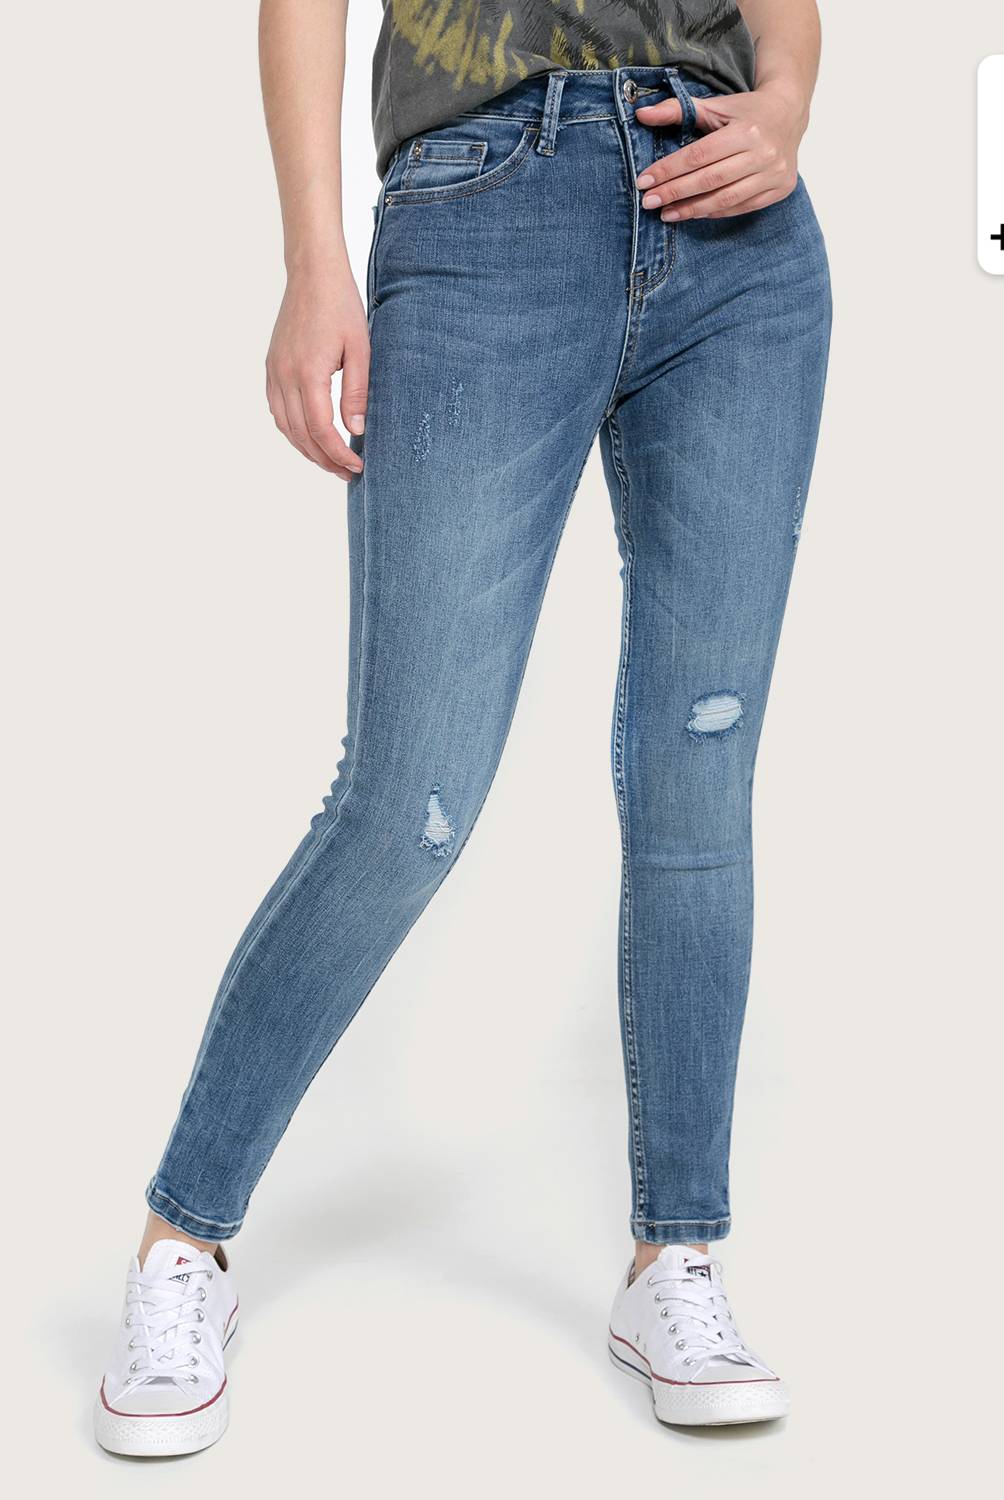 AMERICANINO - Jeans skinny poliéster reciclado Mujer